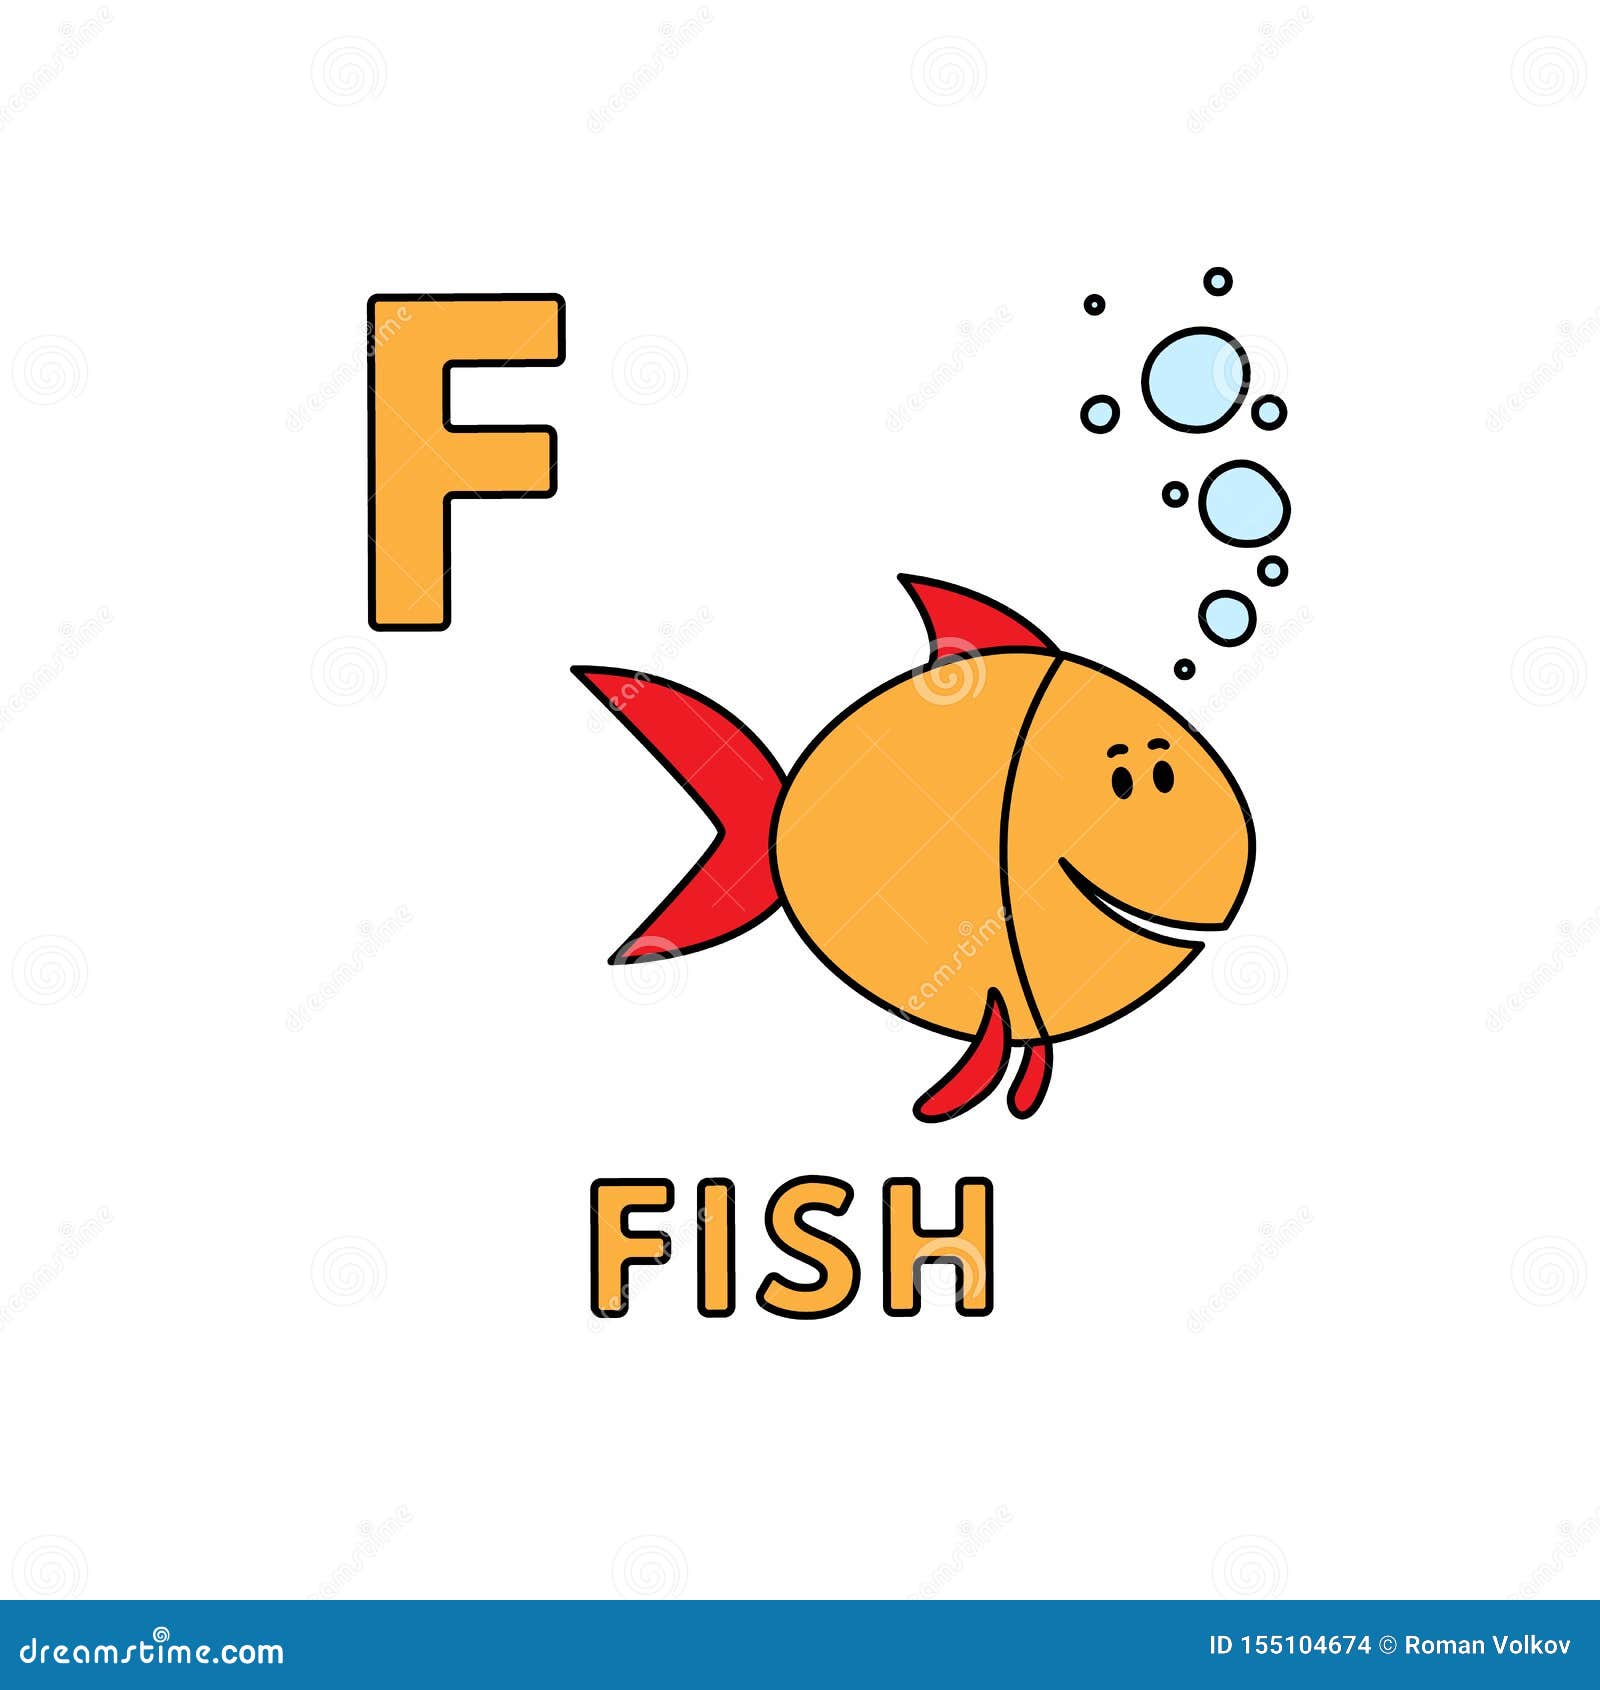 Про рыбу на английском. Карточка рыба на английском. Рыбка на английском. Рыбки на английском для детей. Fish для детей на английском.